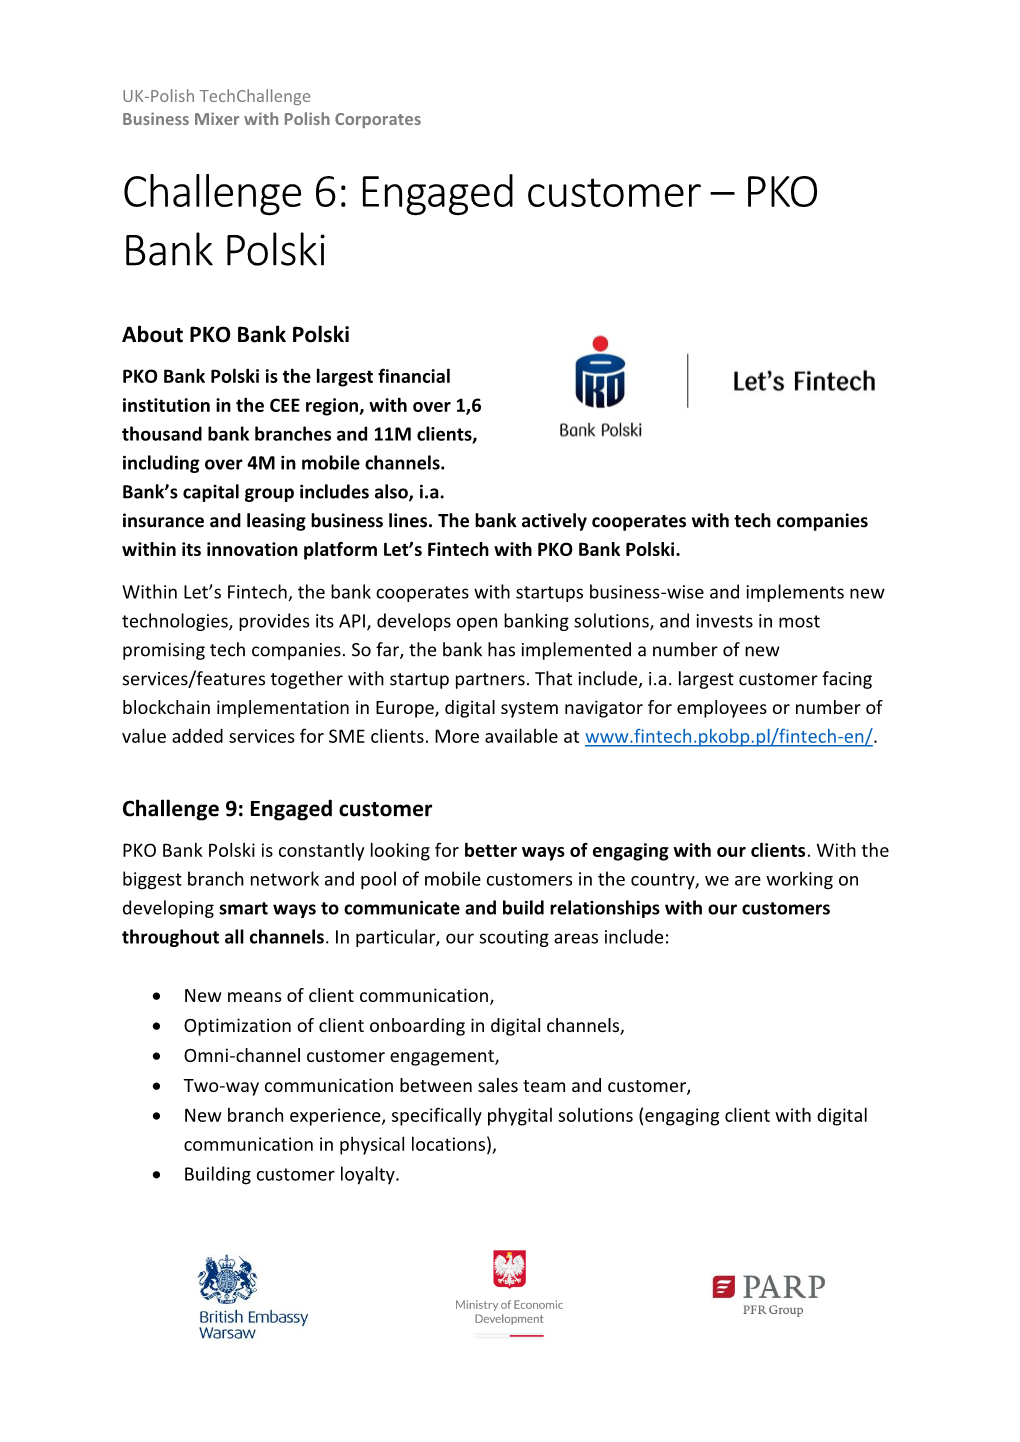 Engaged Customer – PKO Bank Polski